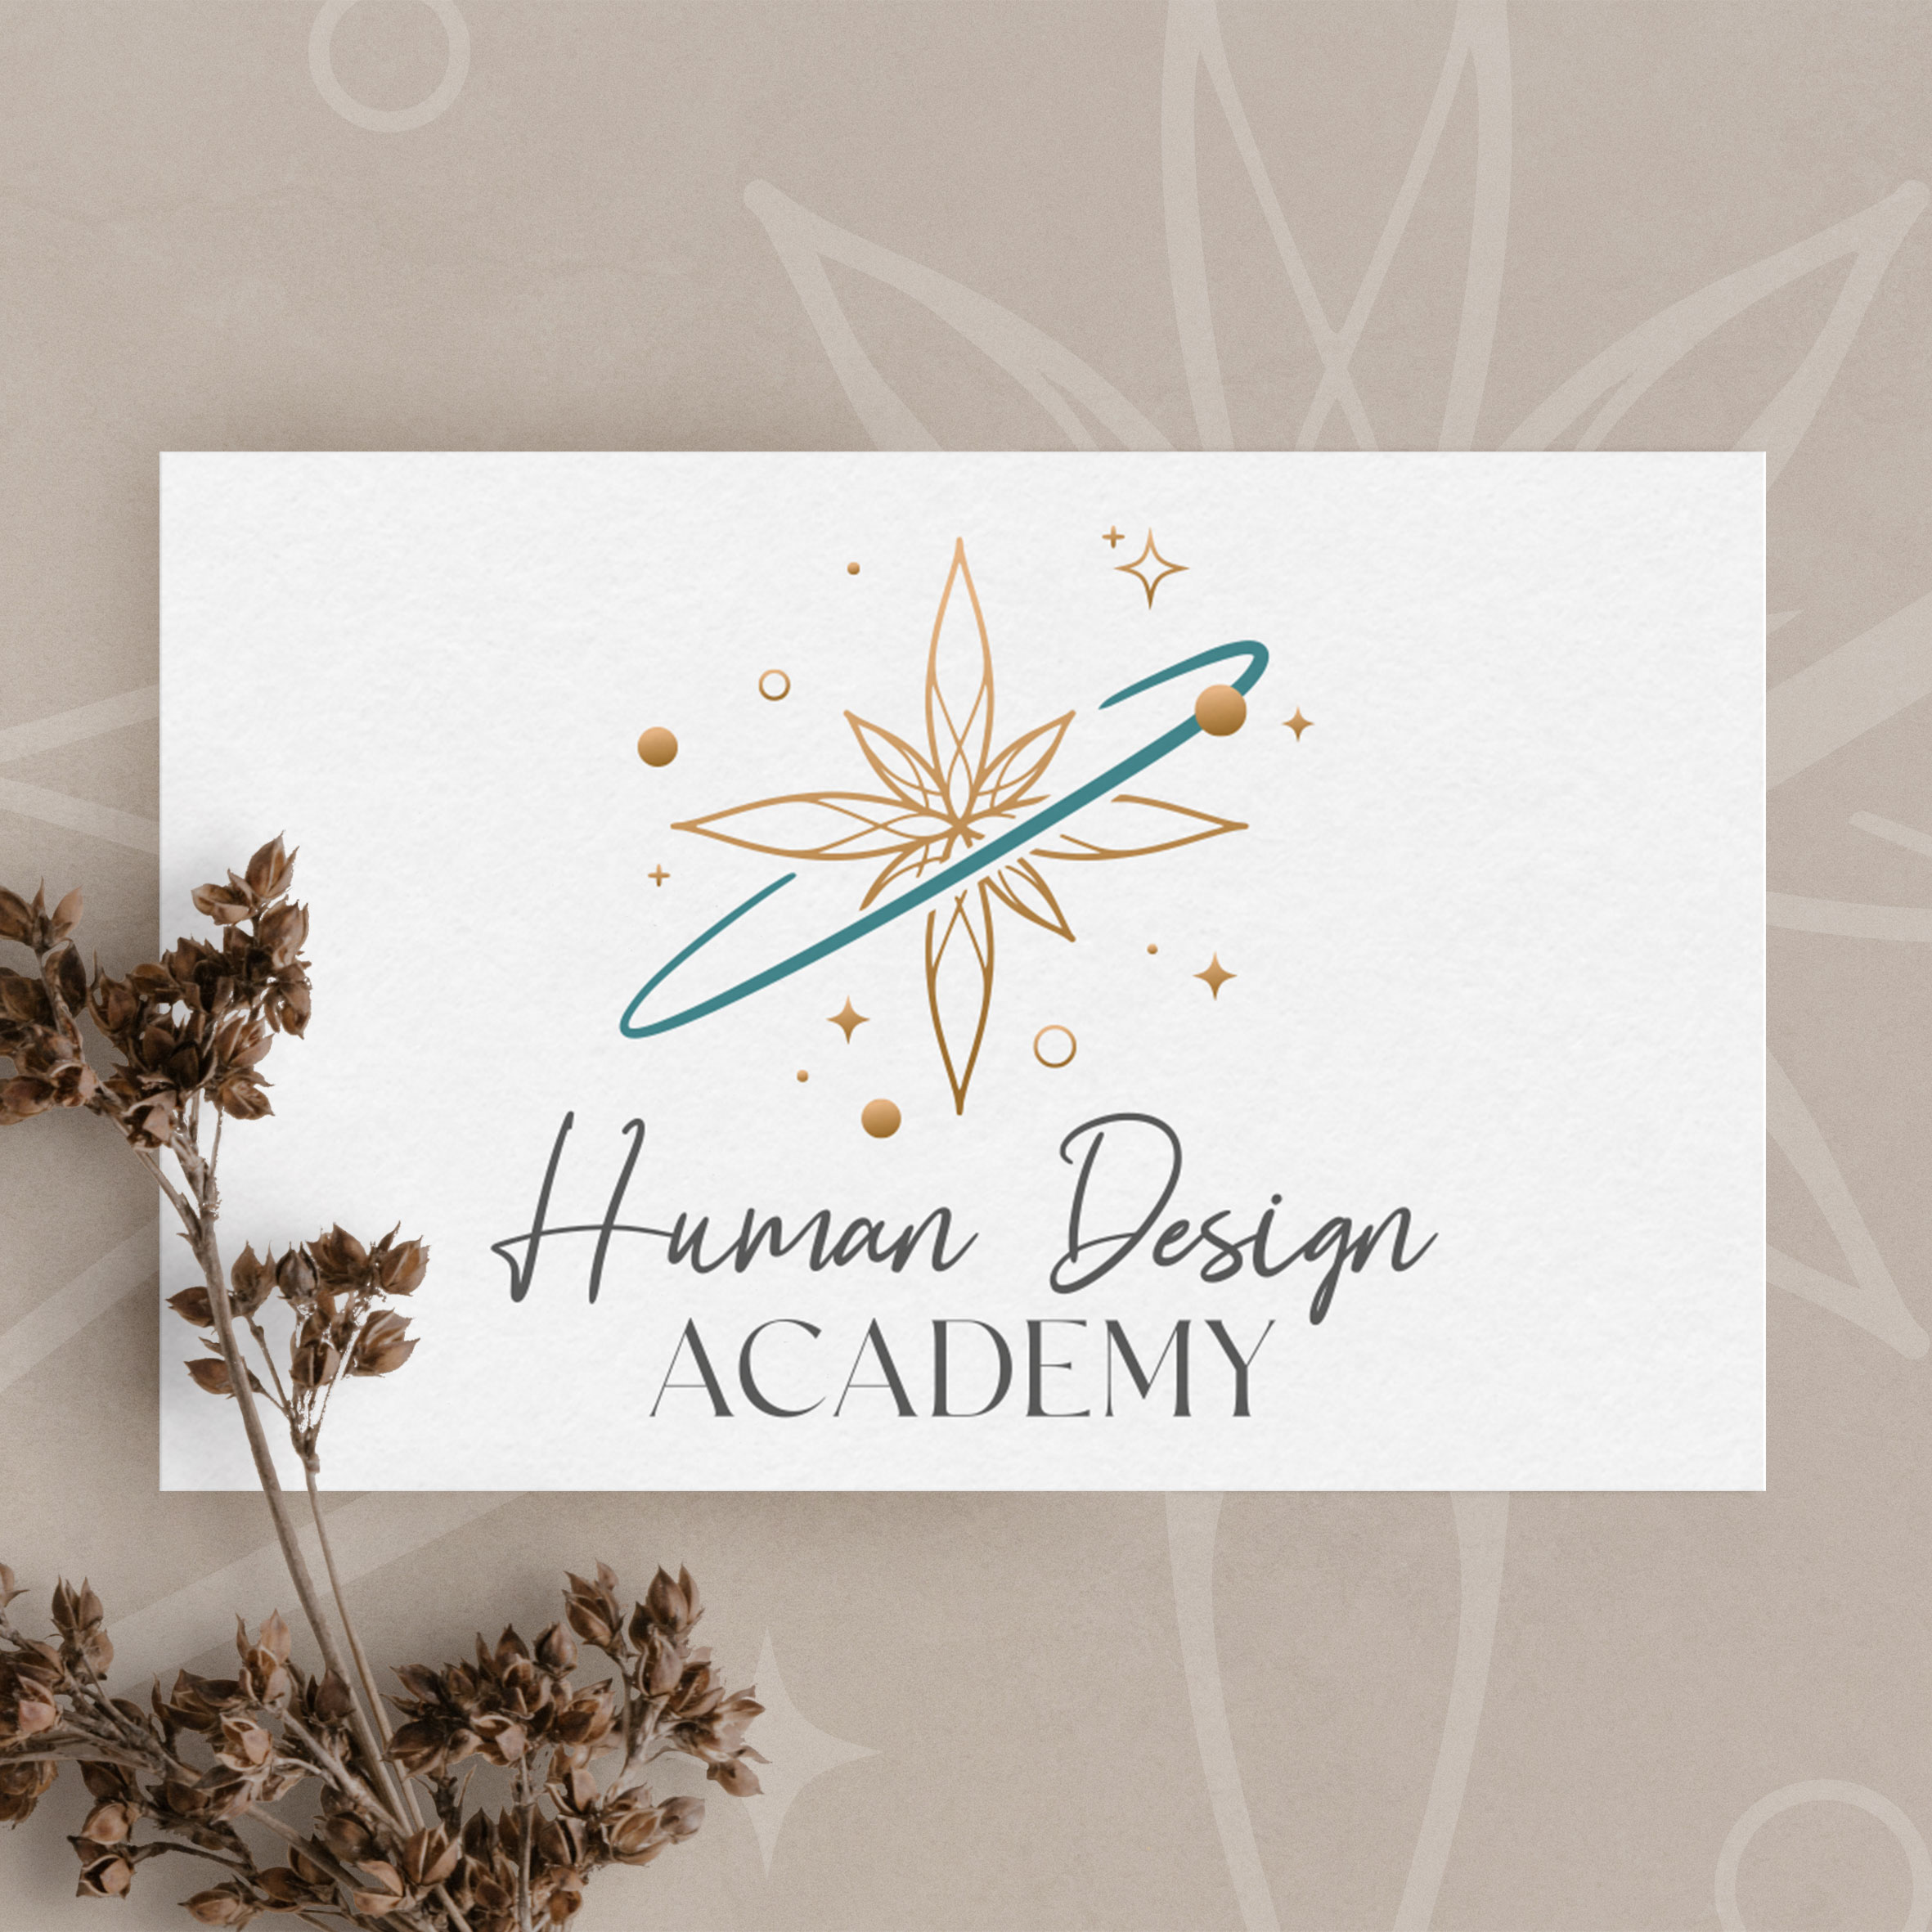 Human Design Academy